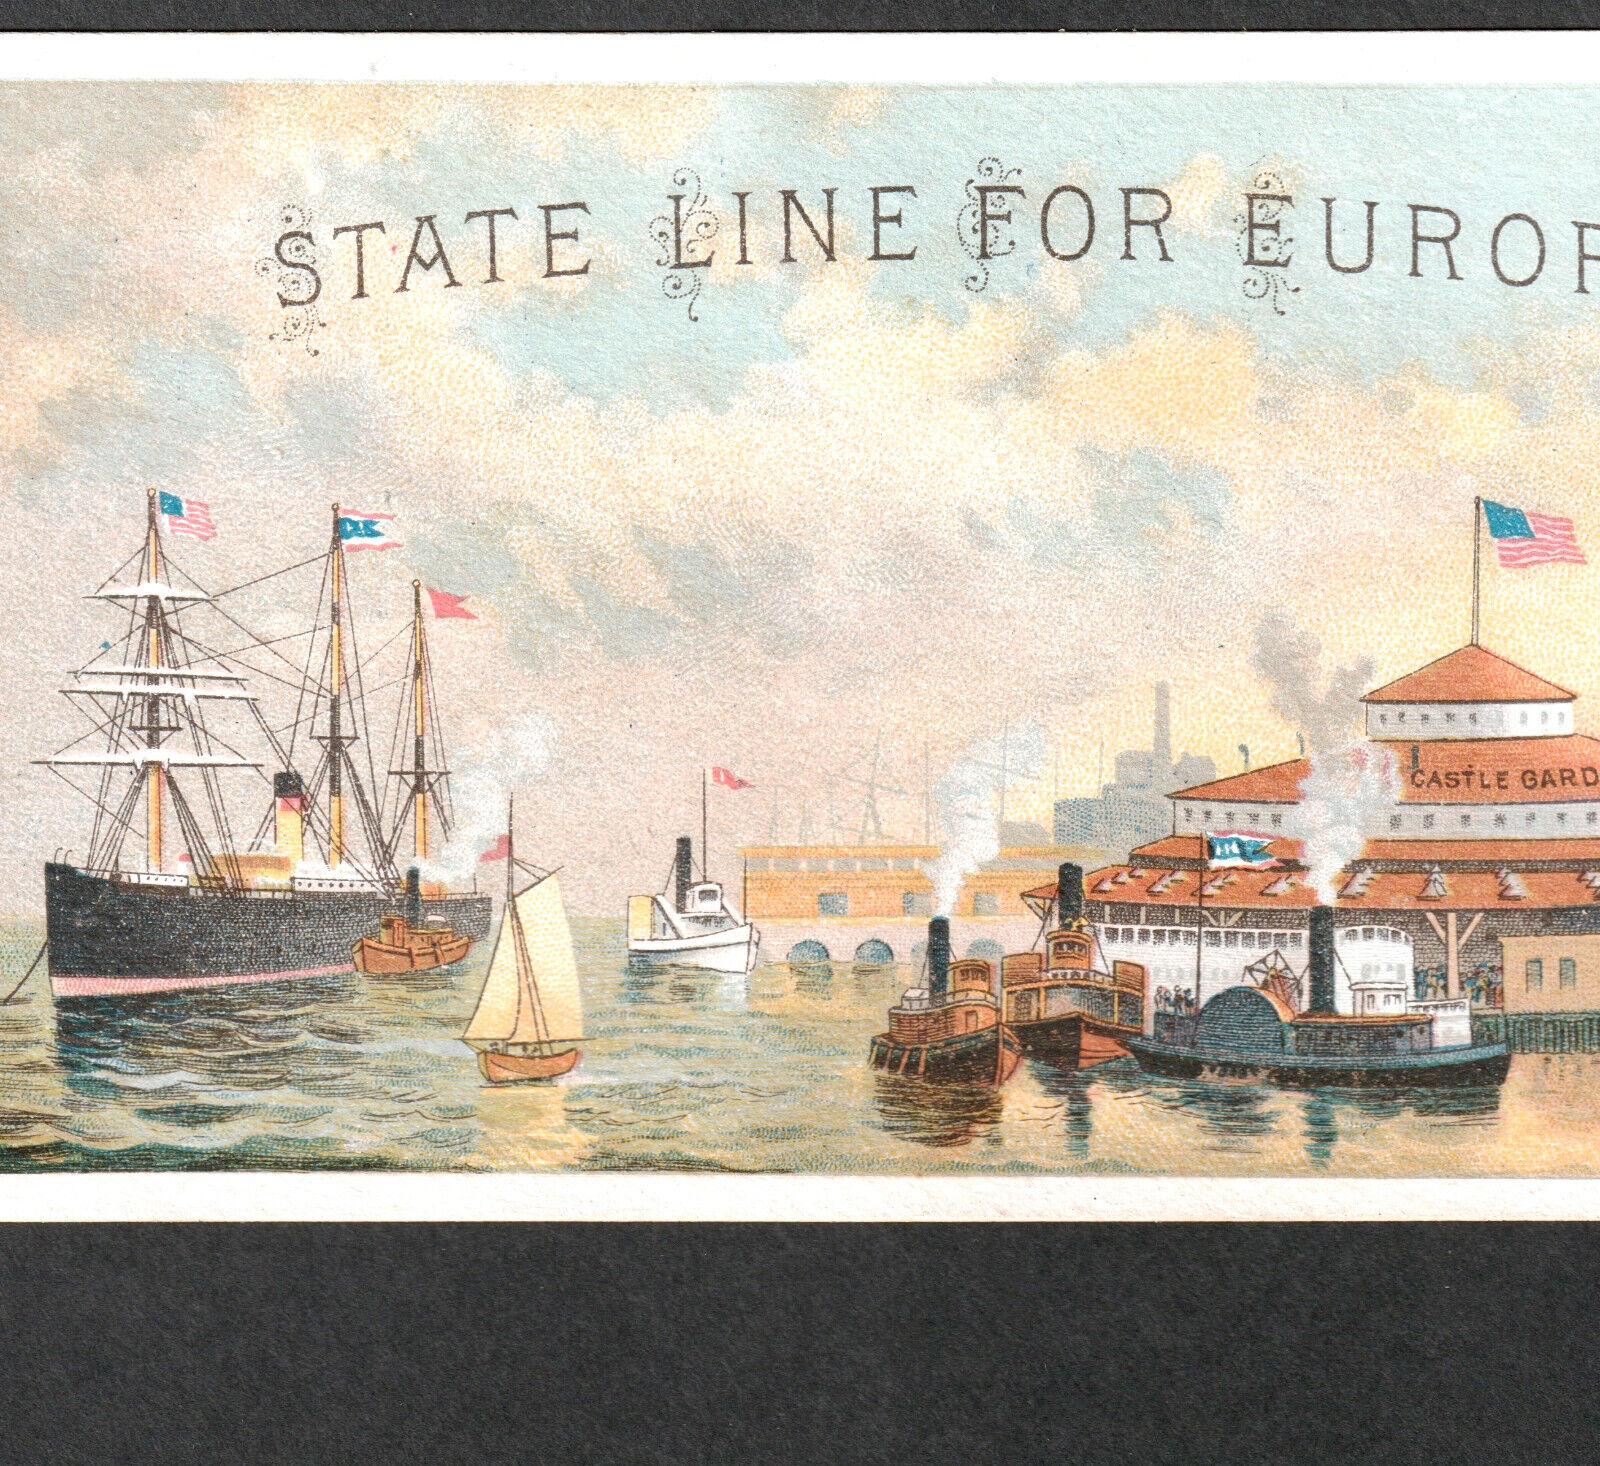 State Line Ship 1800's New York Harbor Castle Garden Steamship Advertising Card